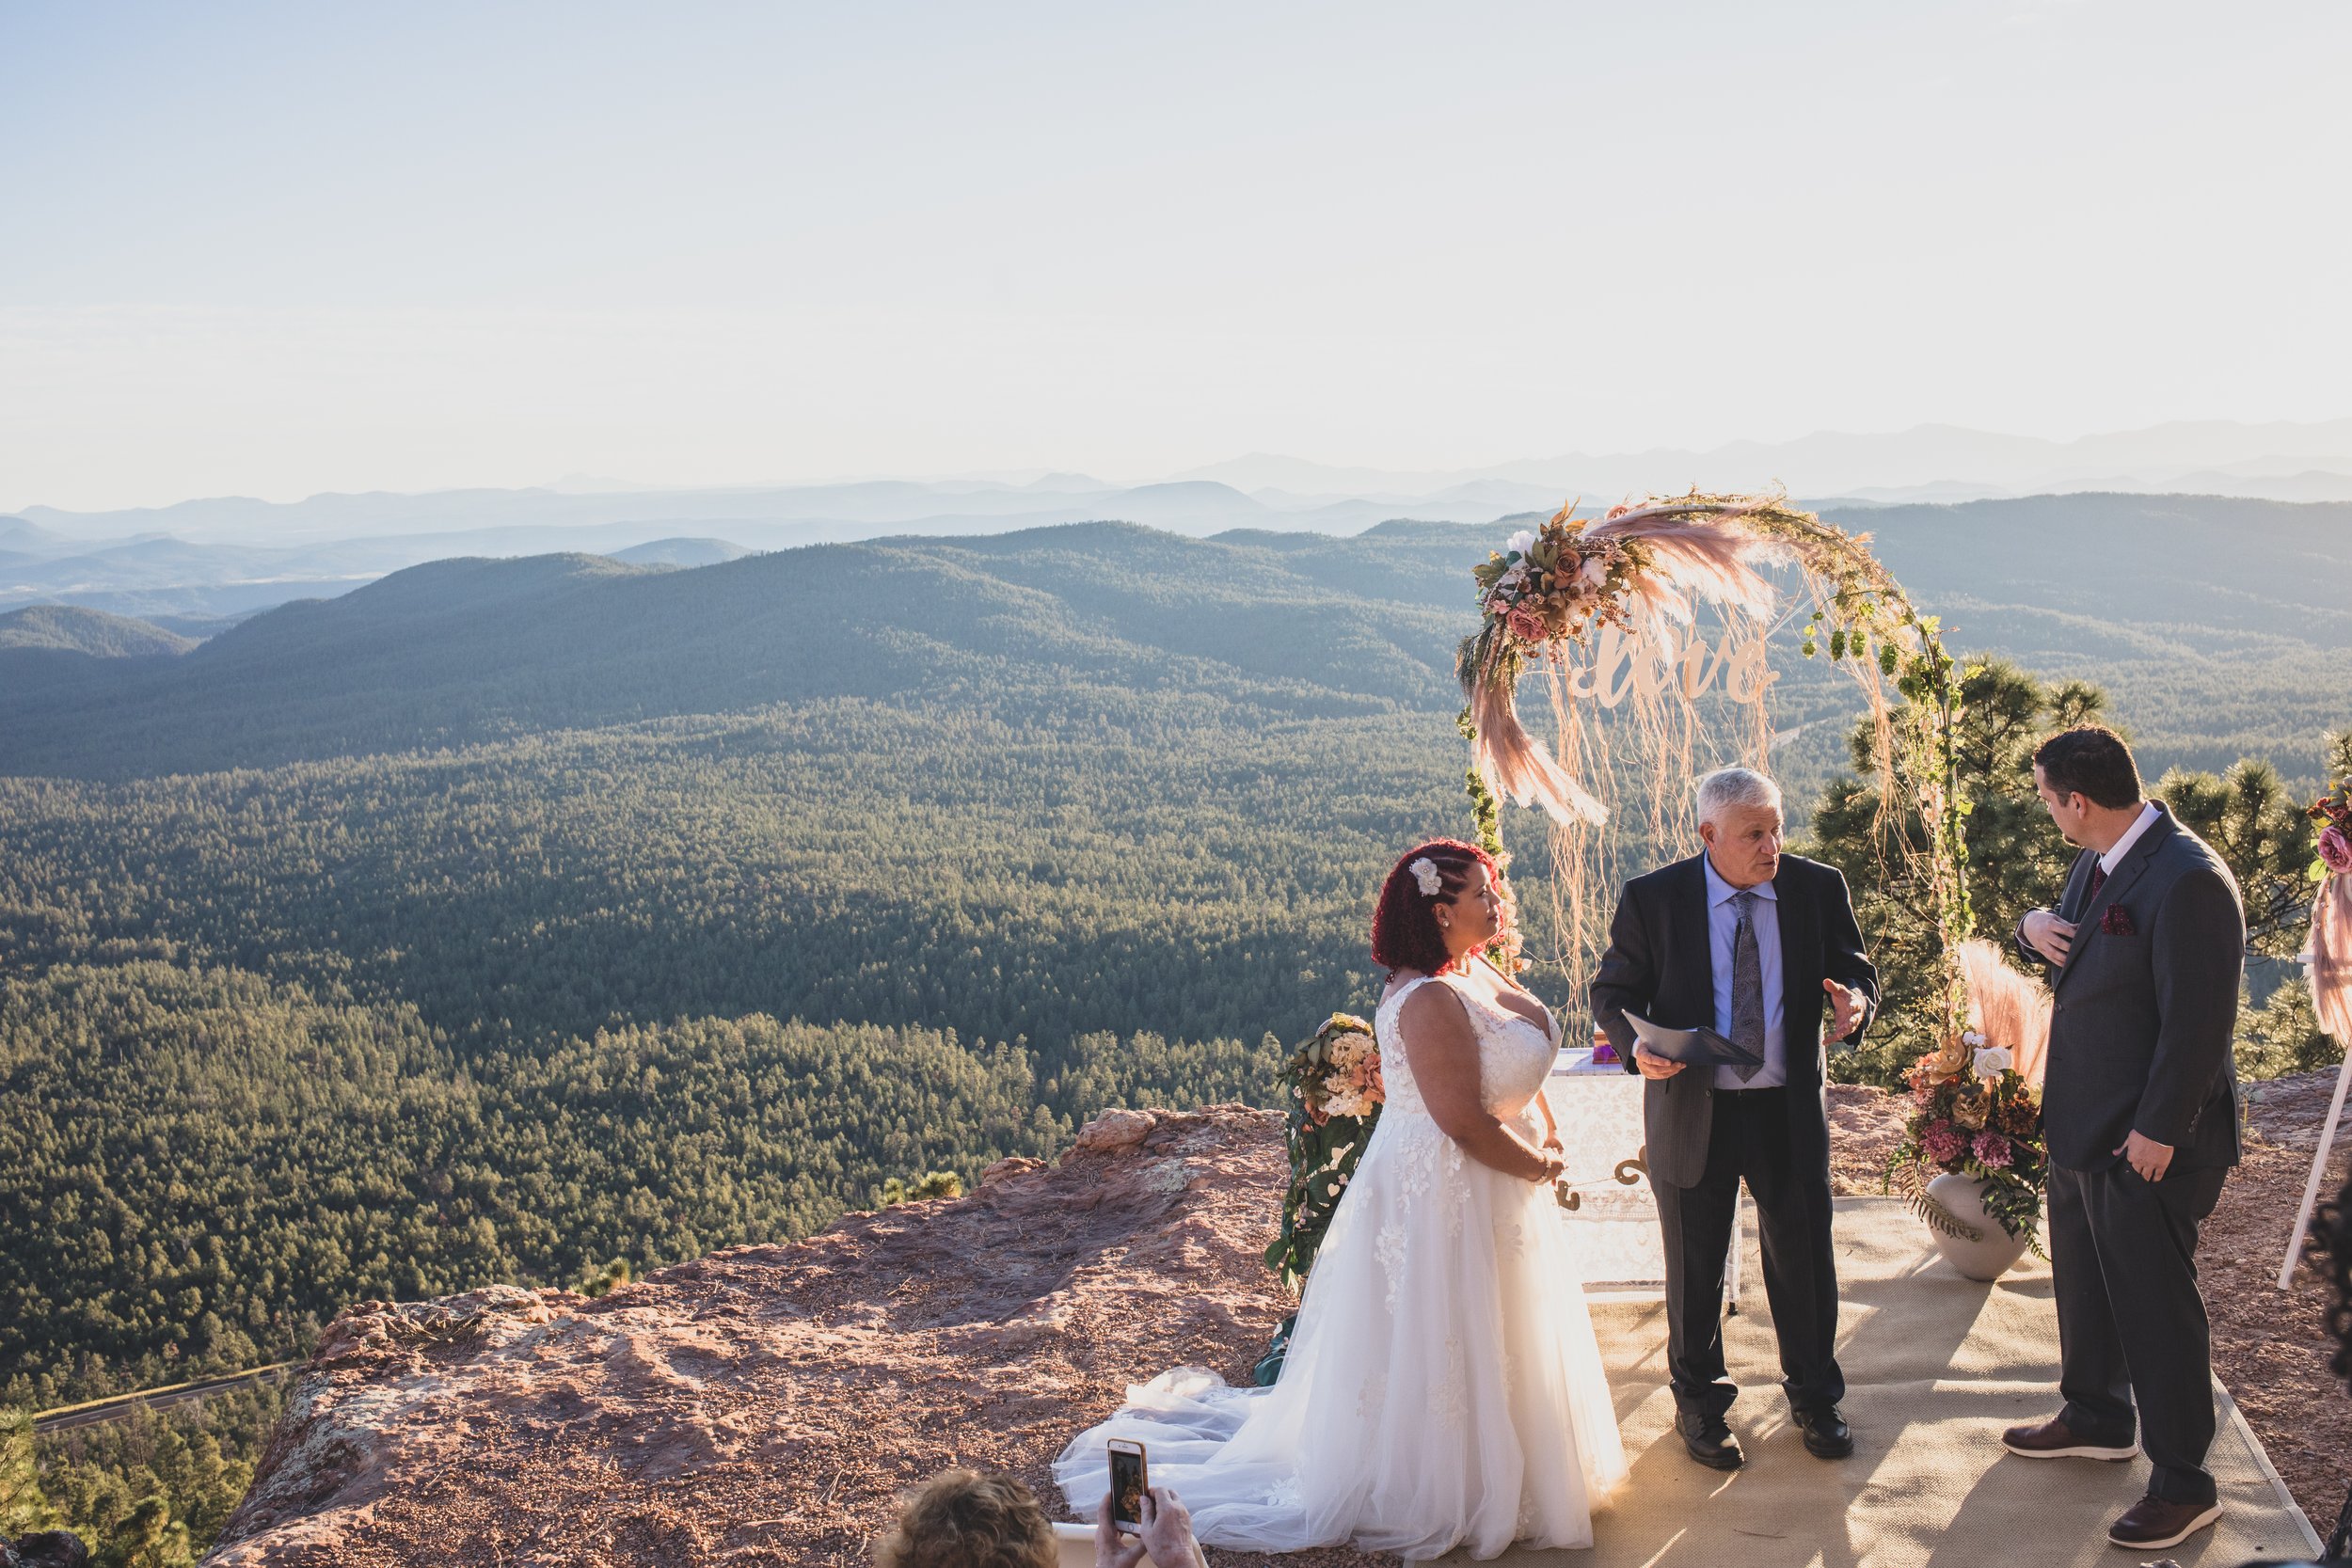  Couple at Northern Arizona Rim Elopement by Northern Arizona Photographer Jennifer Lind Schutsky 